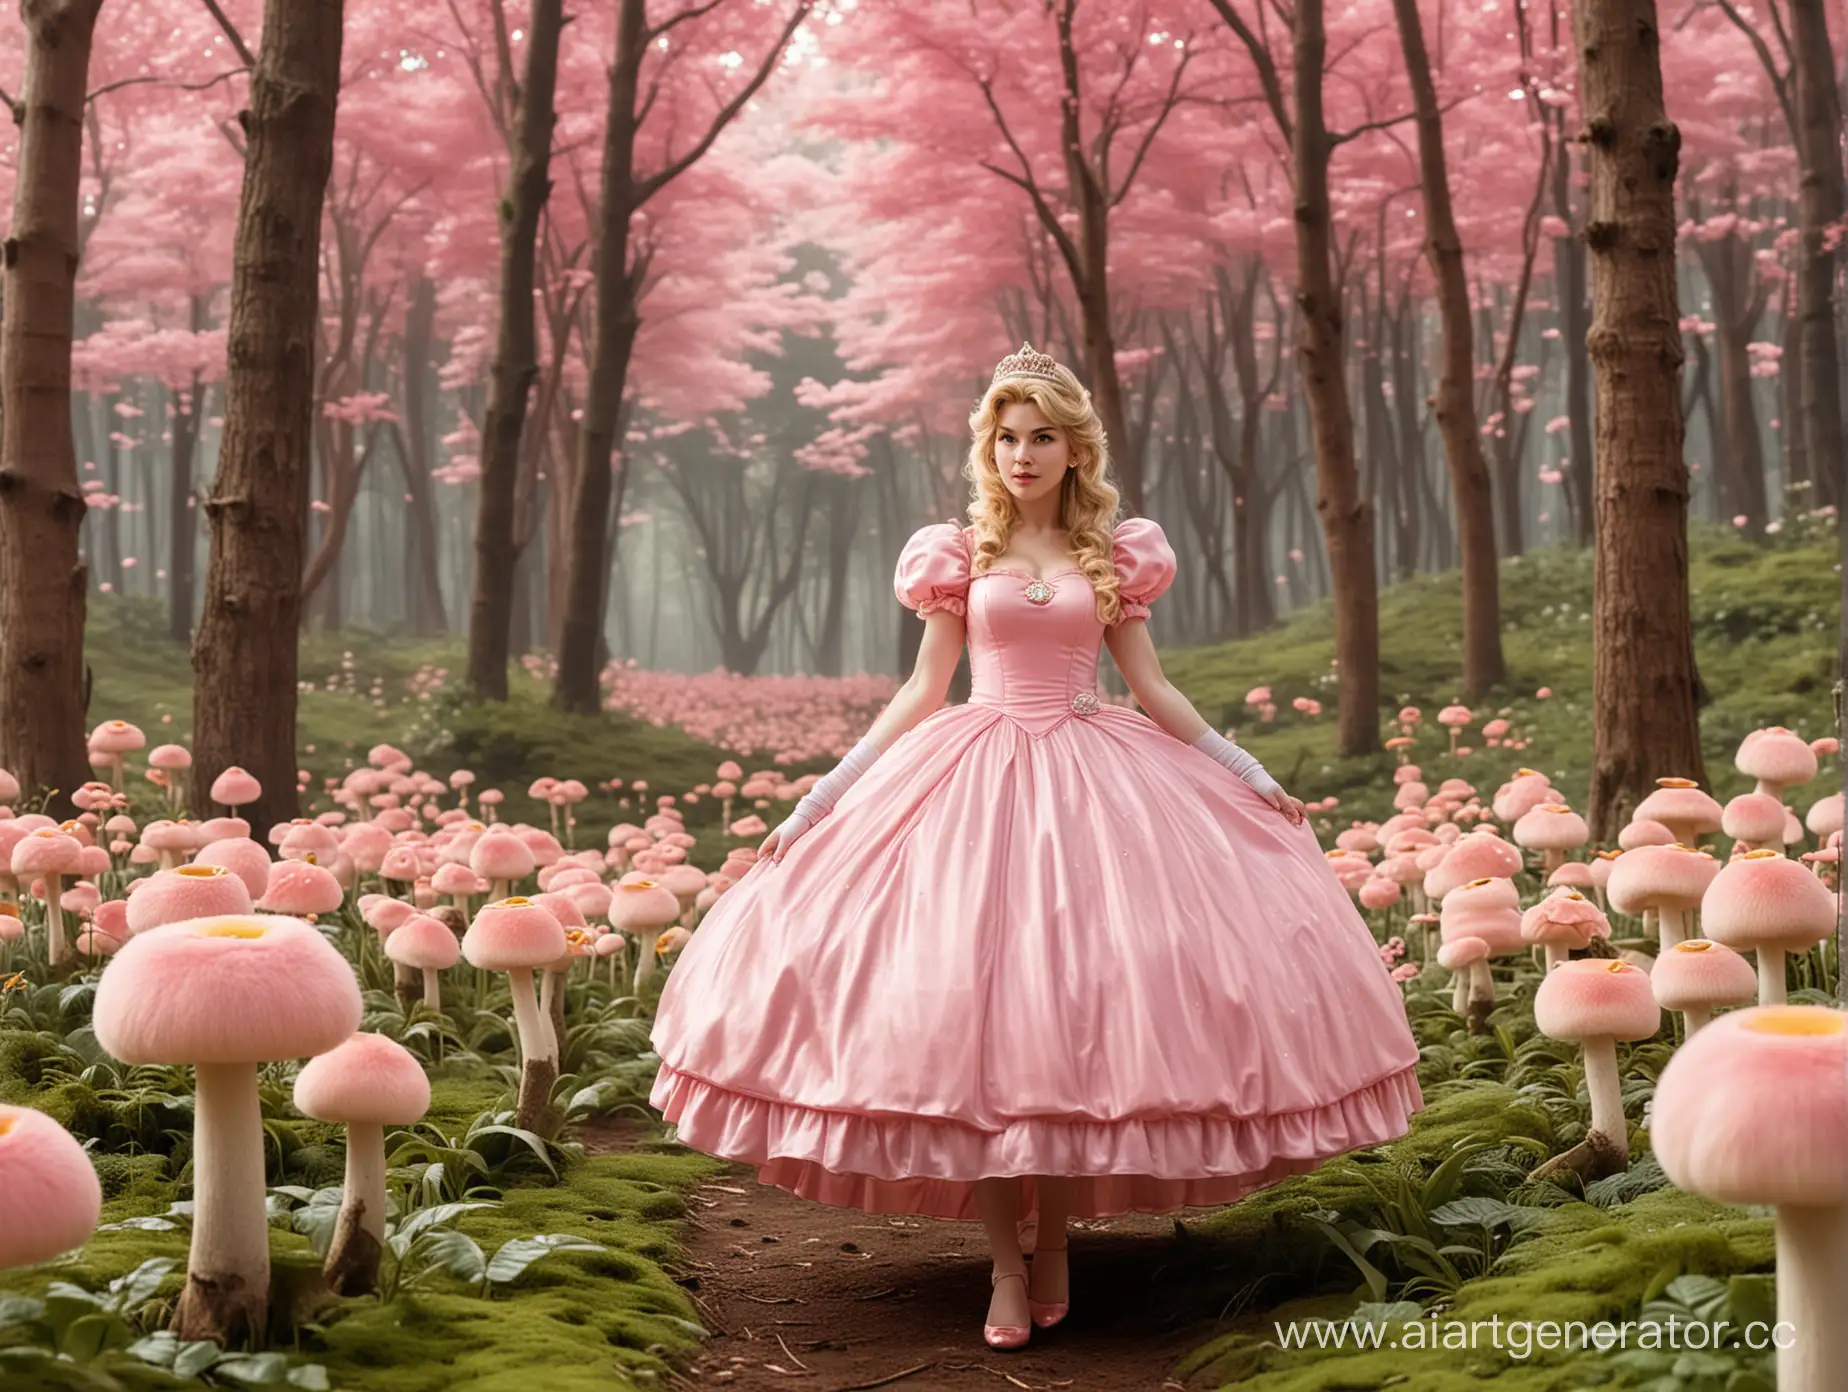 Princess-Peach-in-a-Fluffy-Pink-Dress-Enchanting-Portrait-in-a-Mushroom-Forest